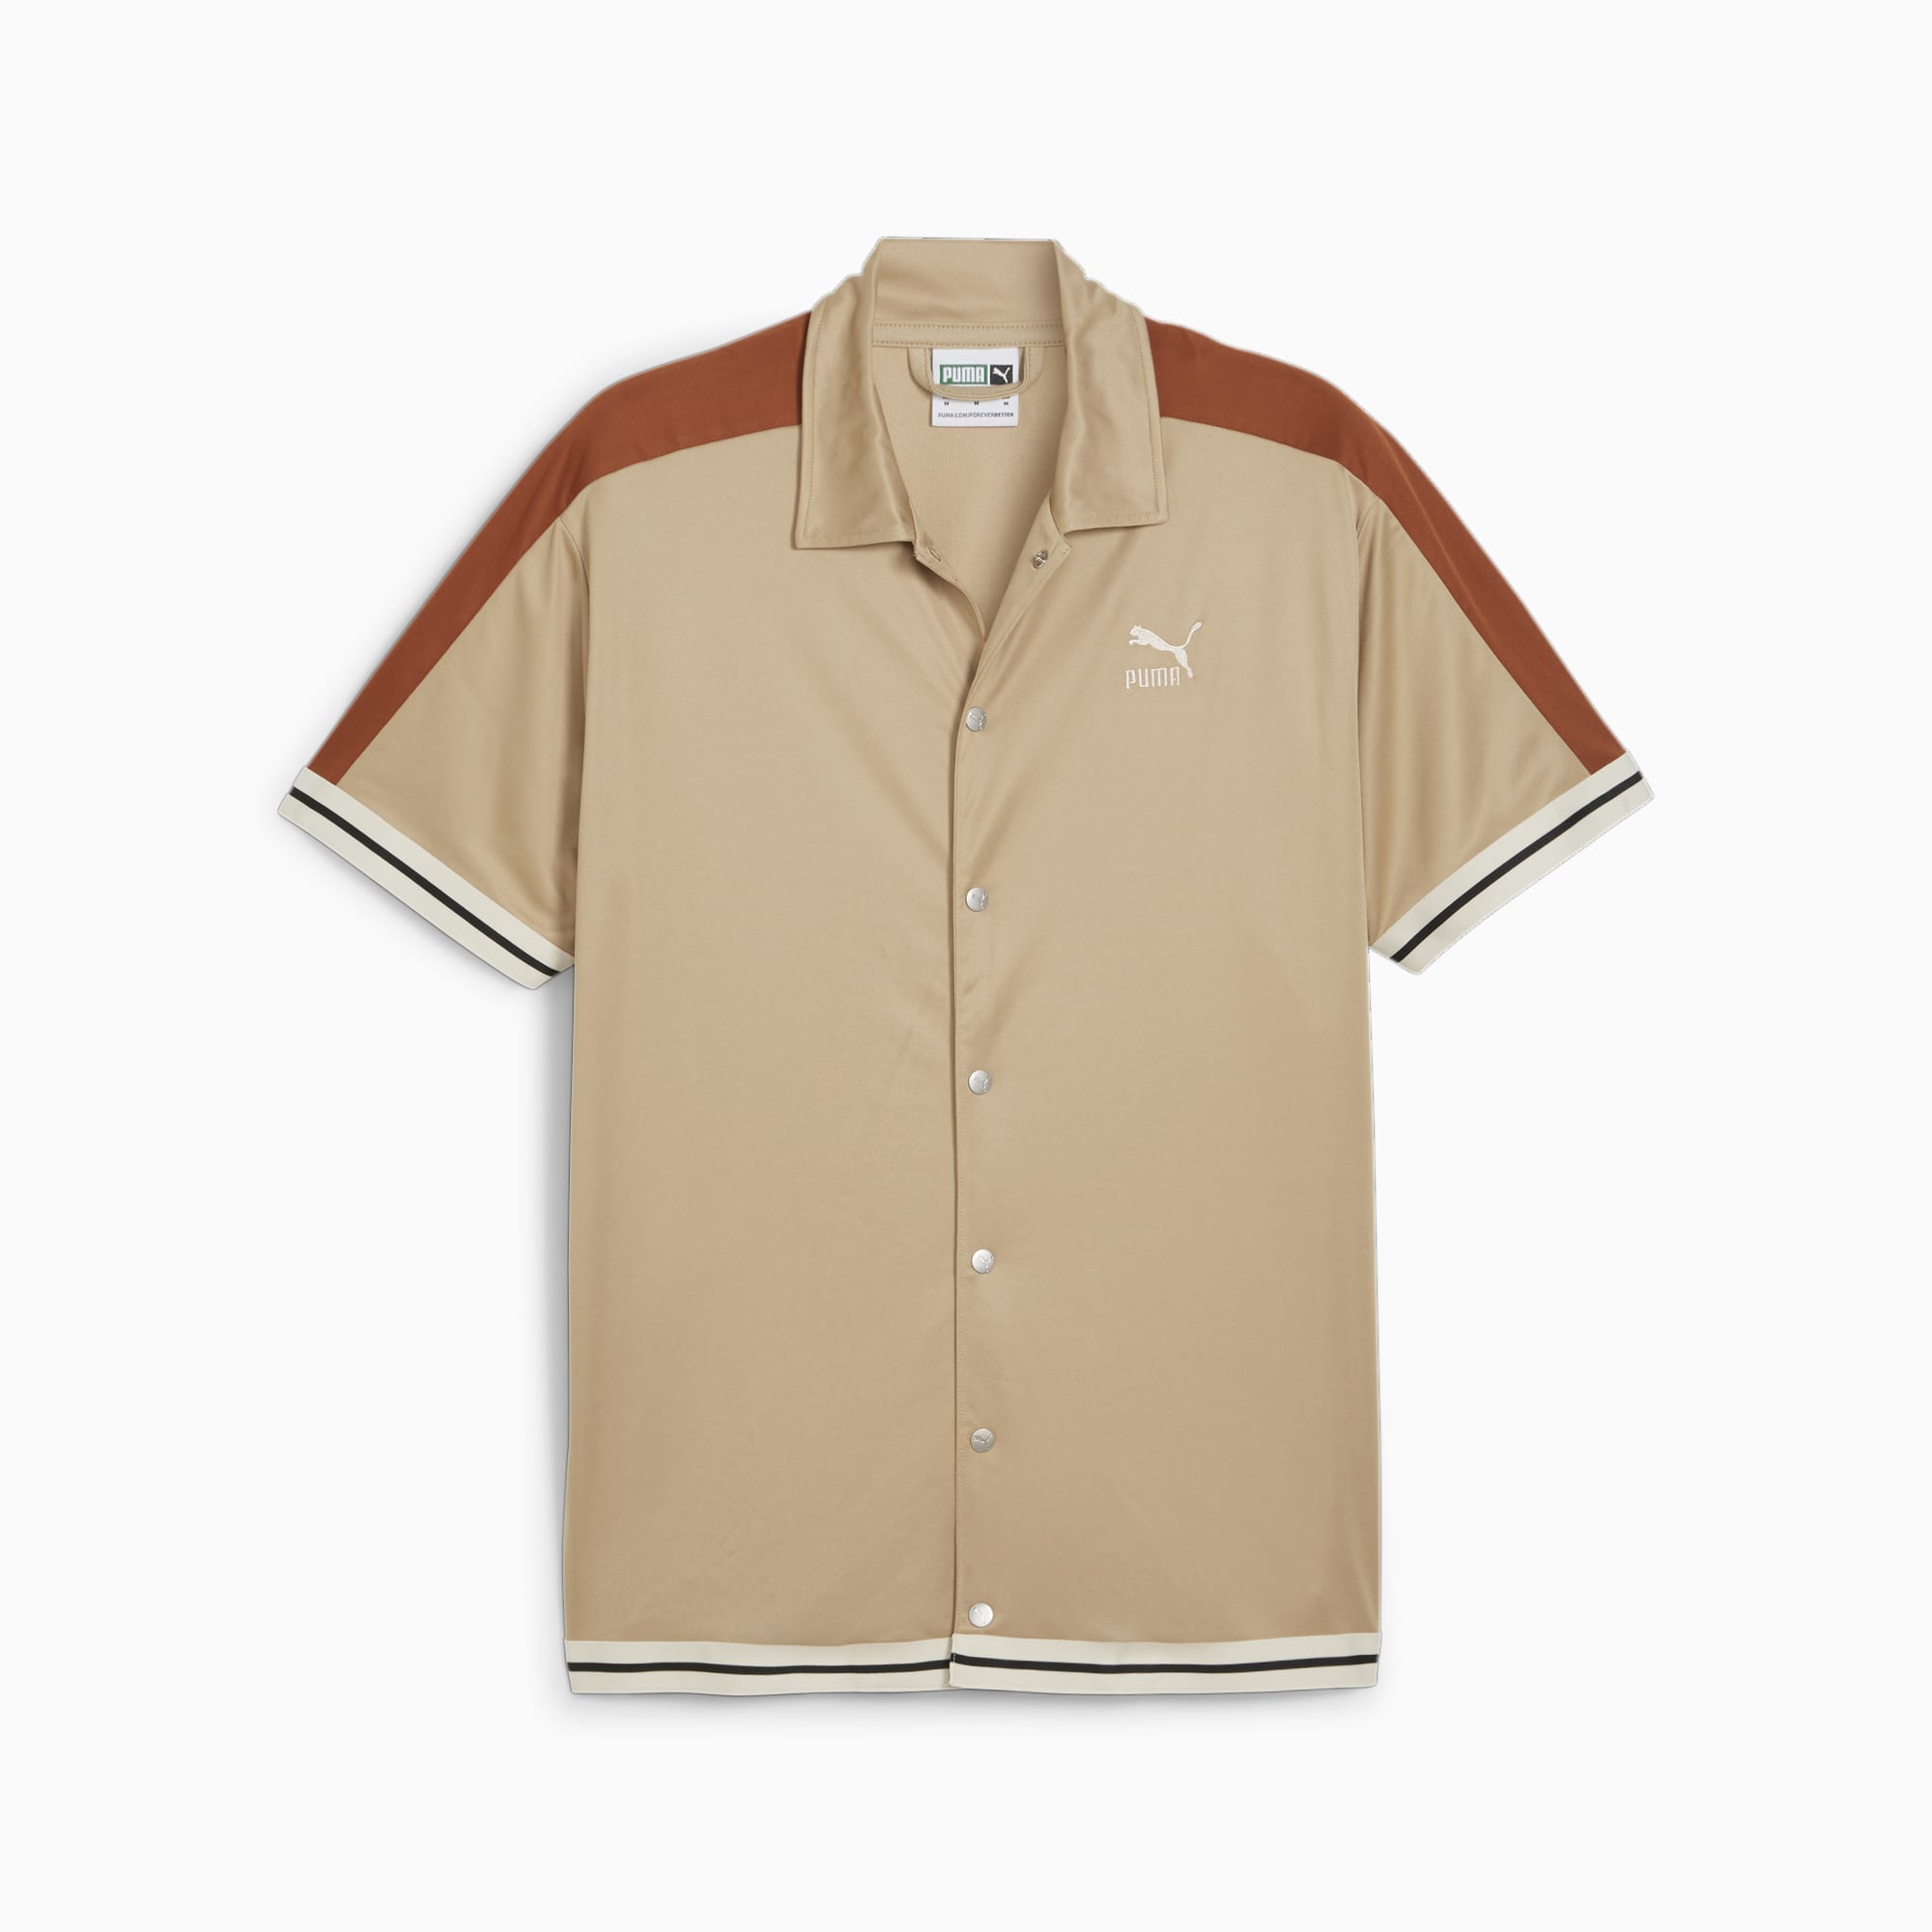 PUMA T7 Men's Shooting Shirt, Prairie Tan, Size XS, Clothing